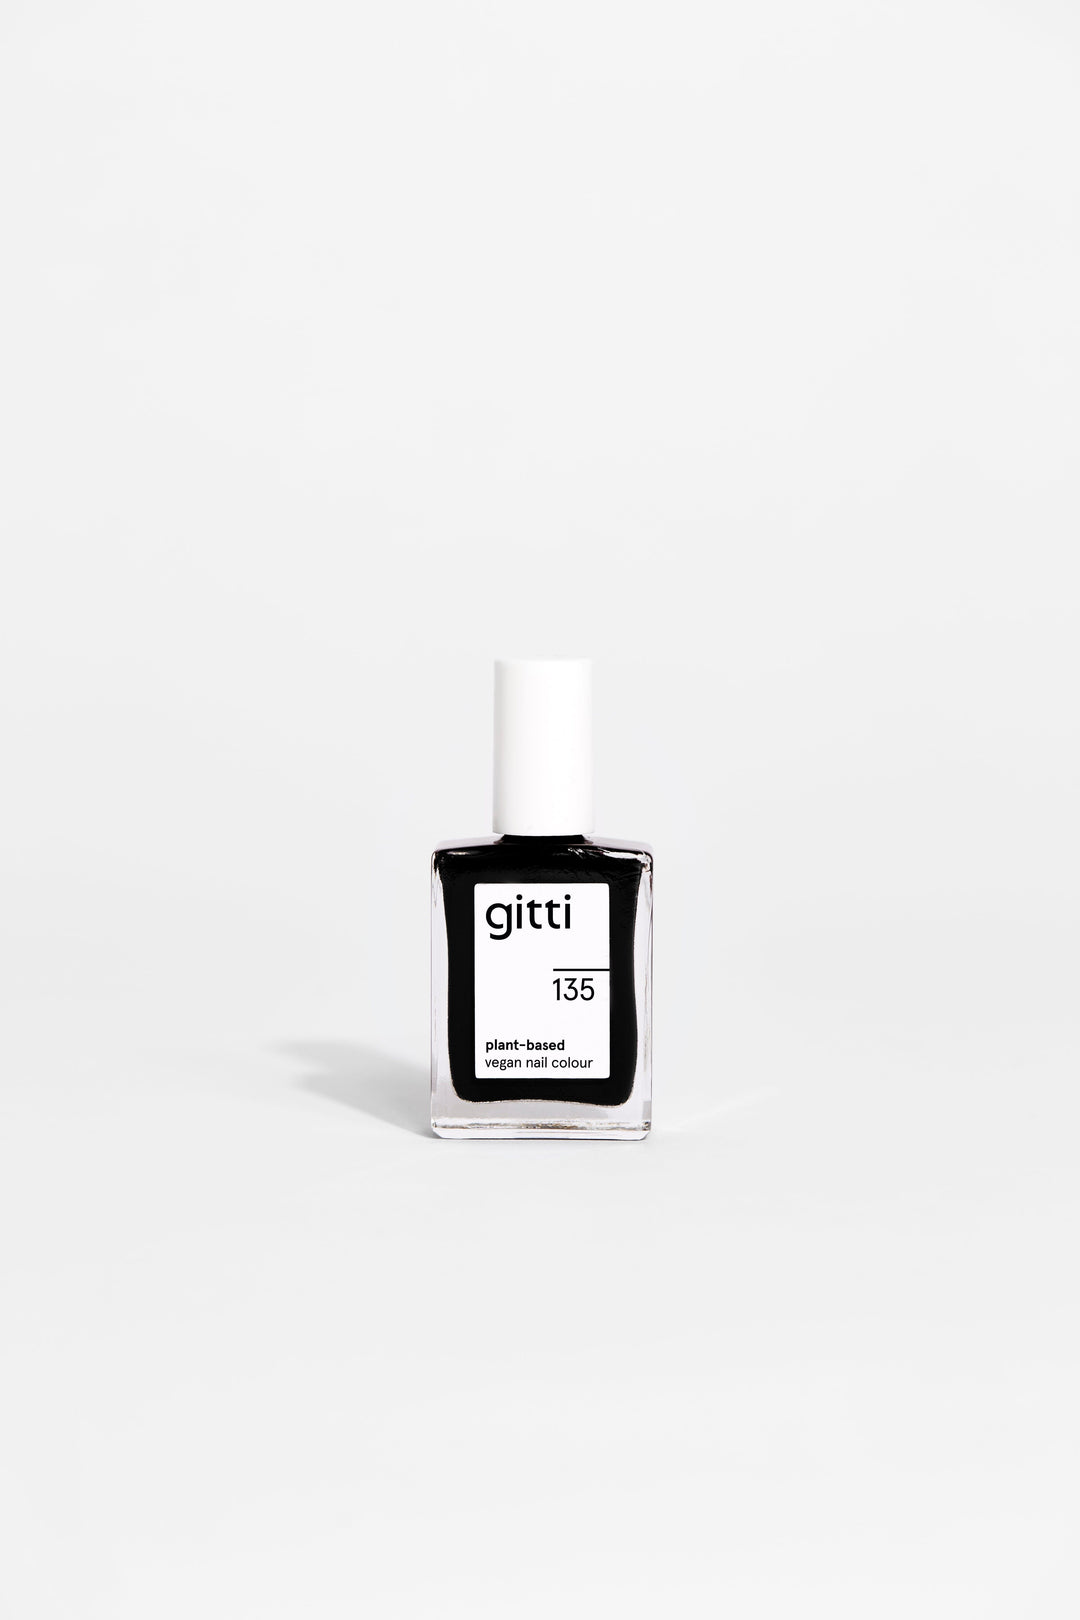 Gitti - Nail Polish 135 - Black Neglelak 